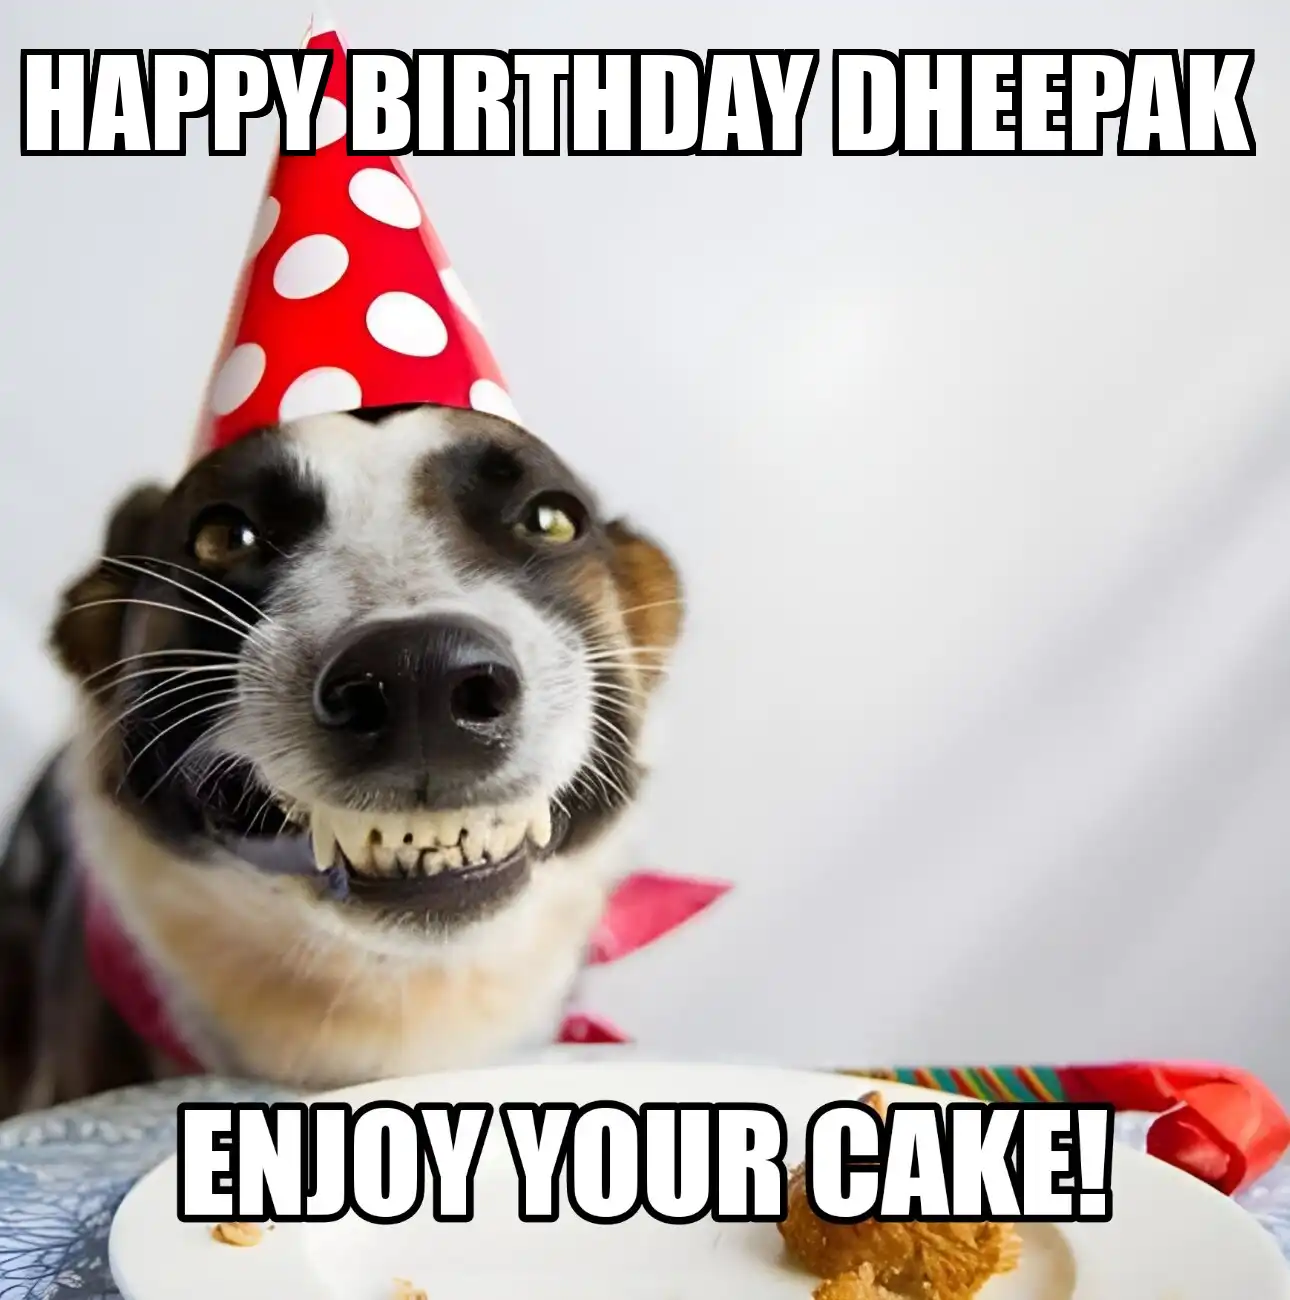 Happy Birthday Dheepak Enjoy Your Cake Dog Meme